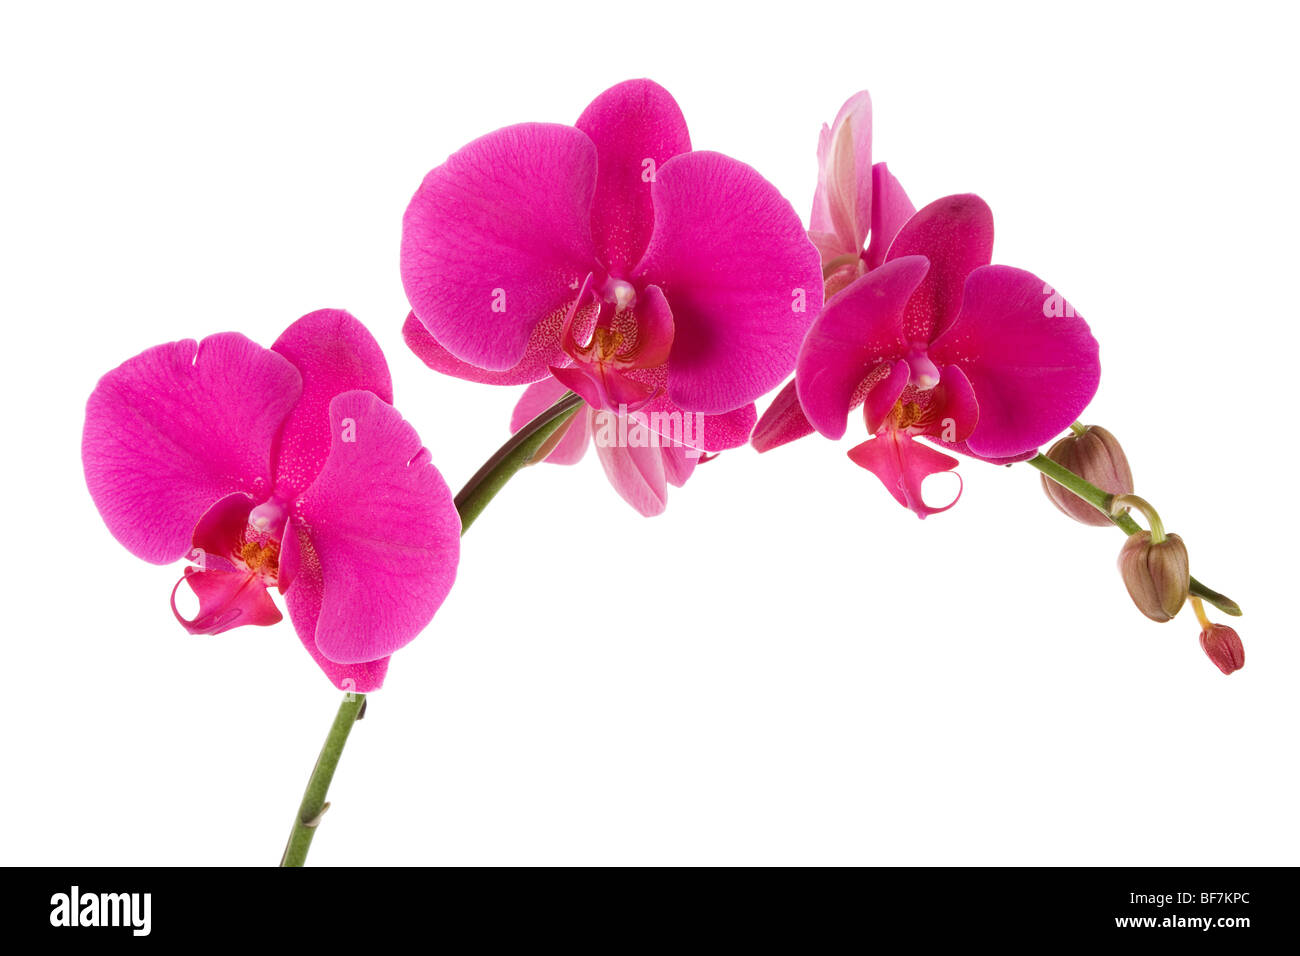 Polilla Rosa orquídea con fondo blanco. Foto de stock